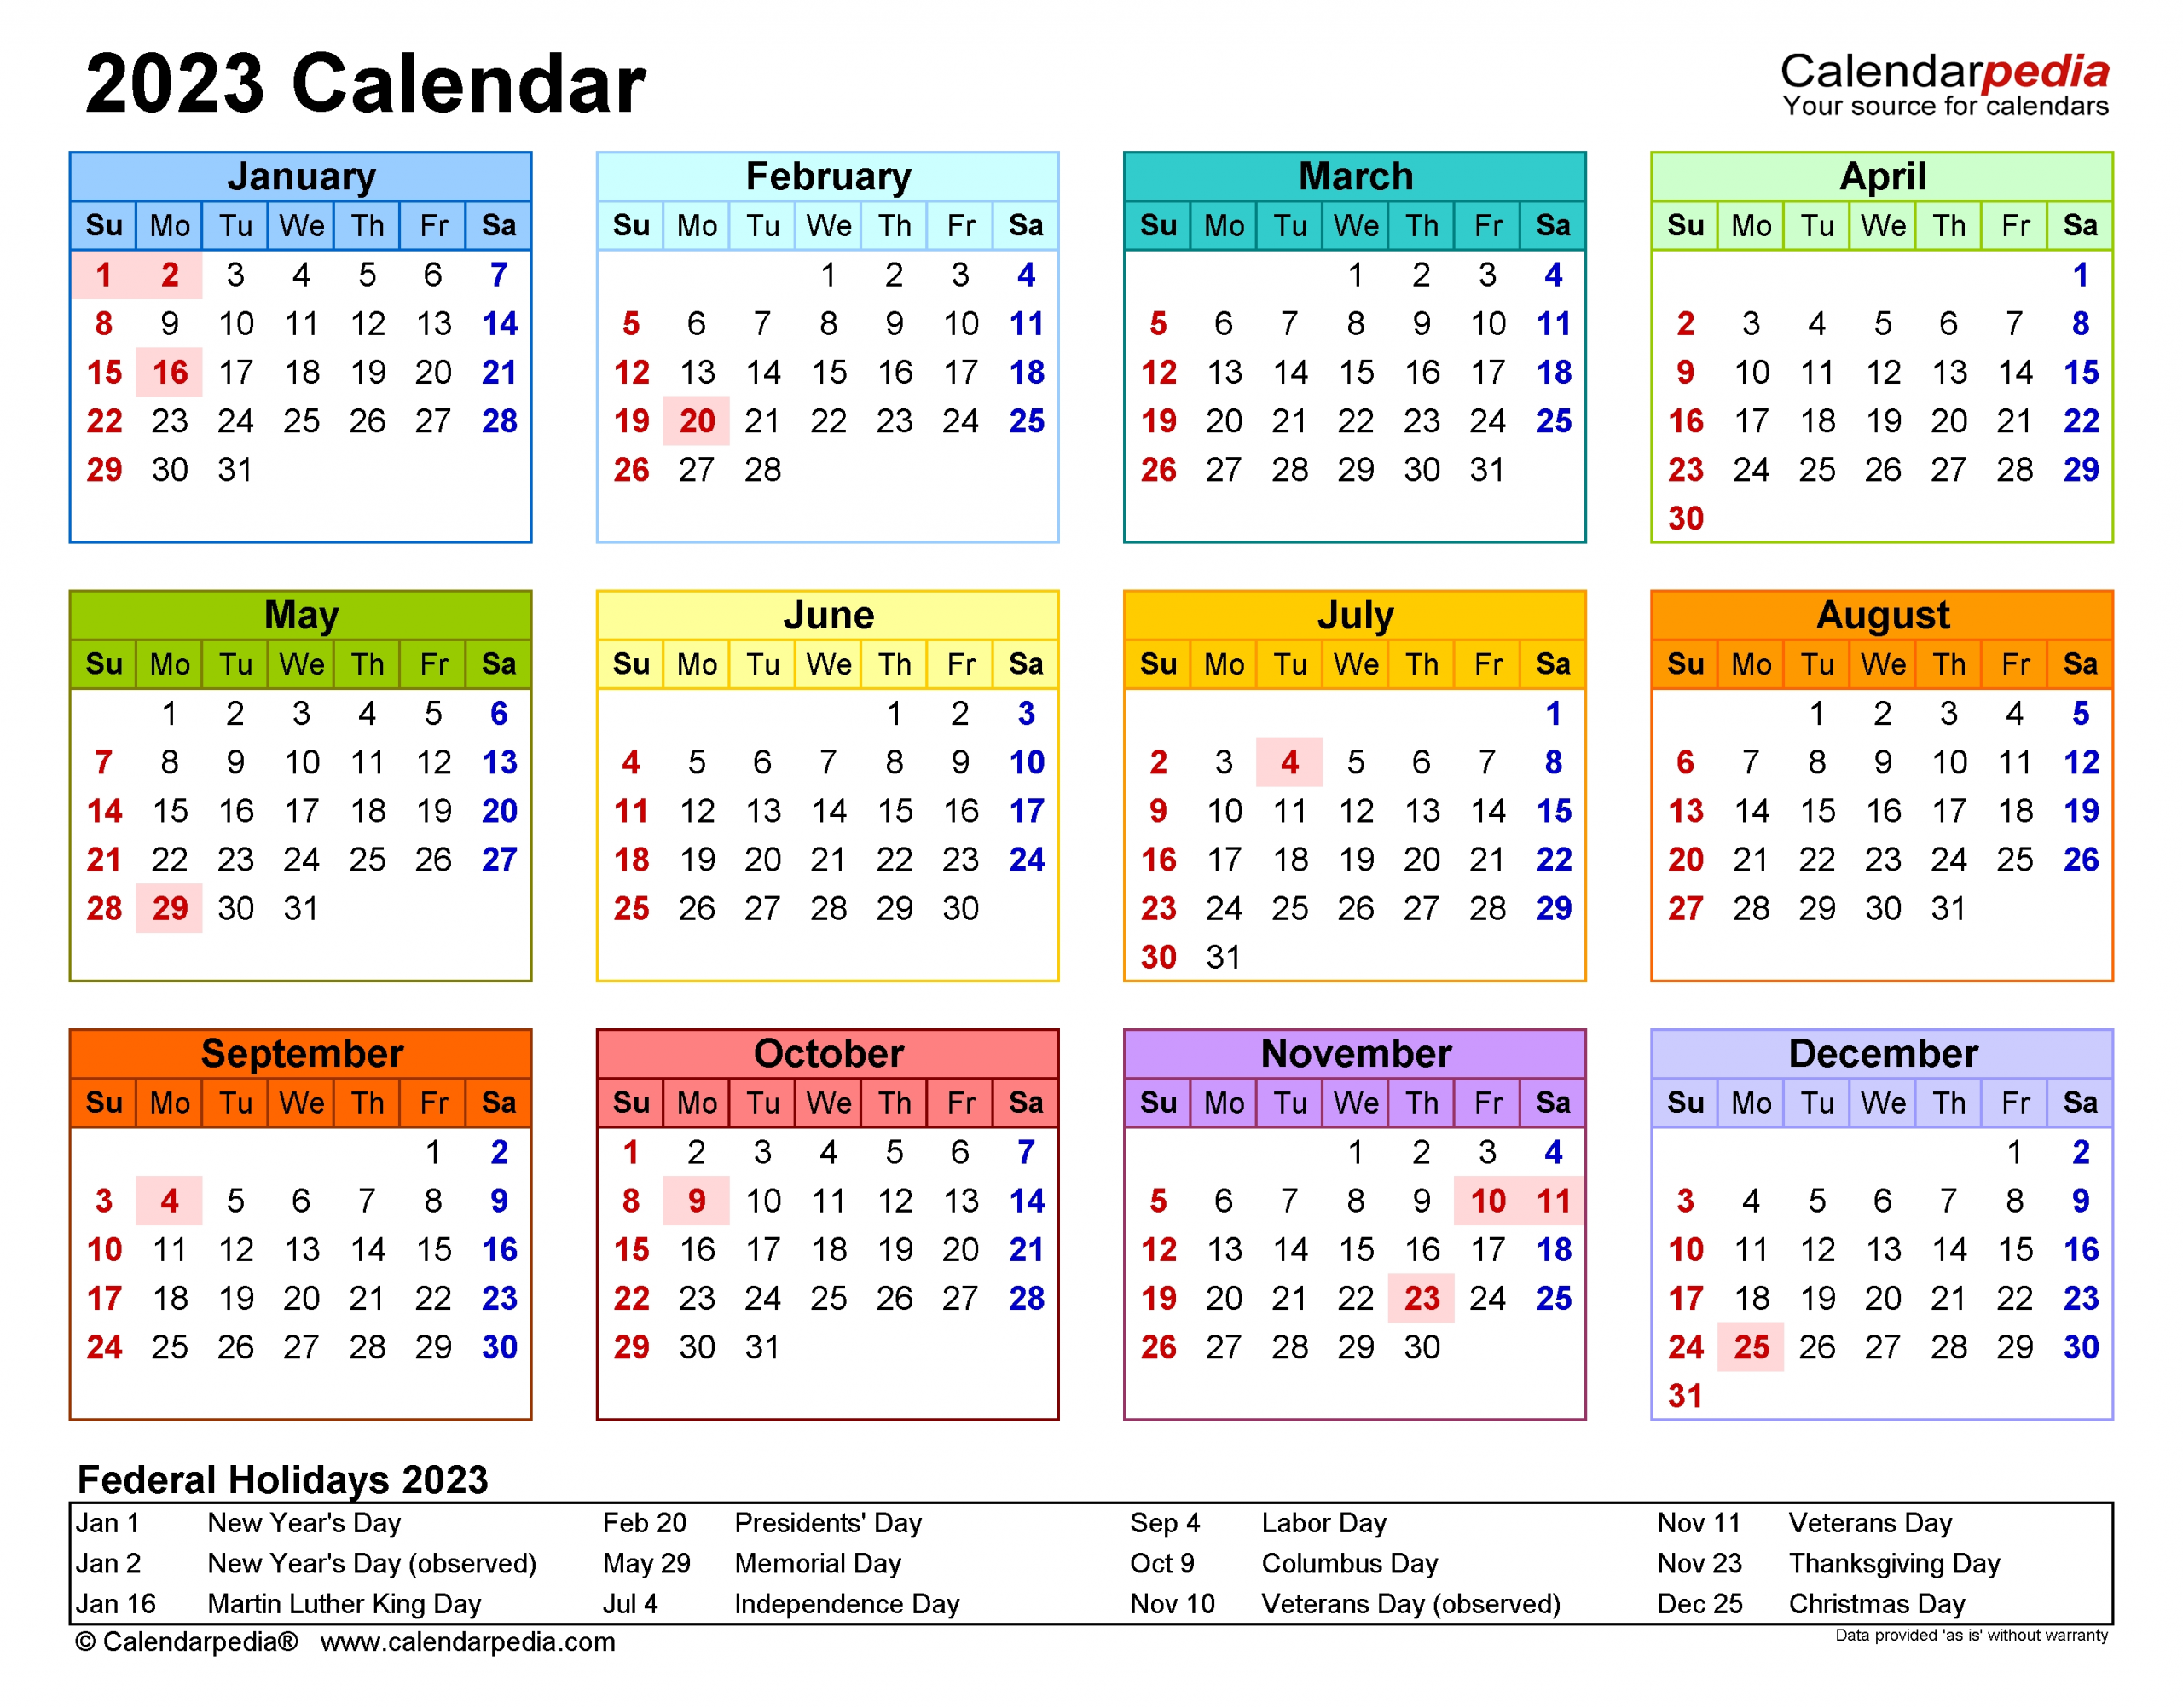 2023 Calendar - Free Printable Word Templates - Calendarpedia